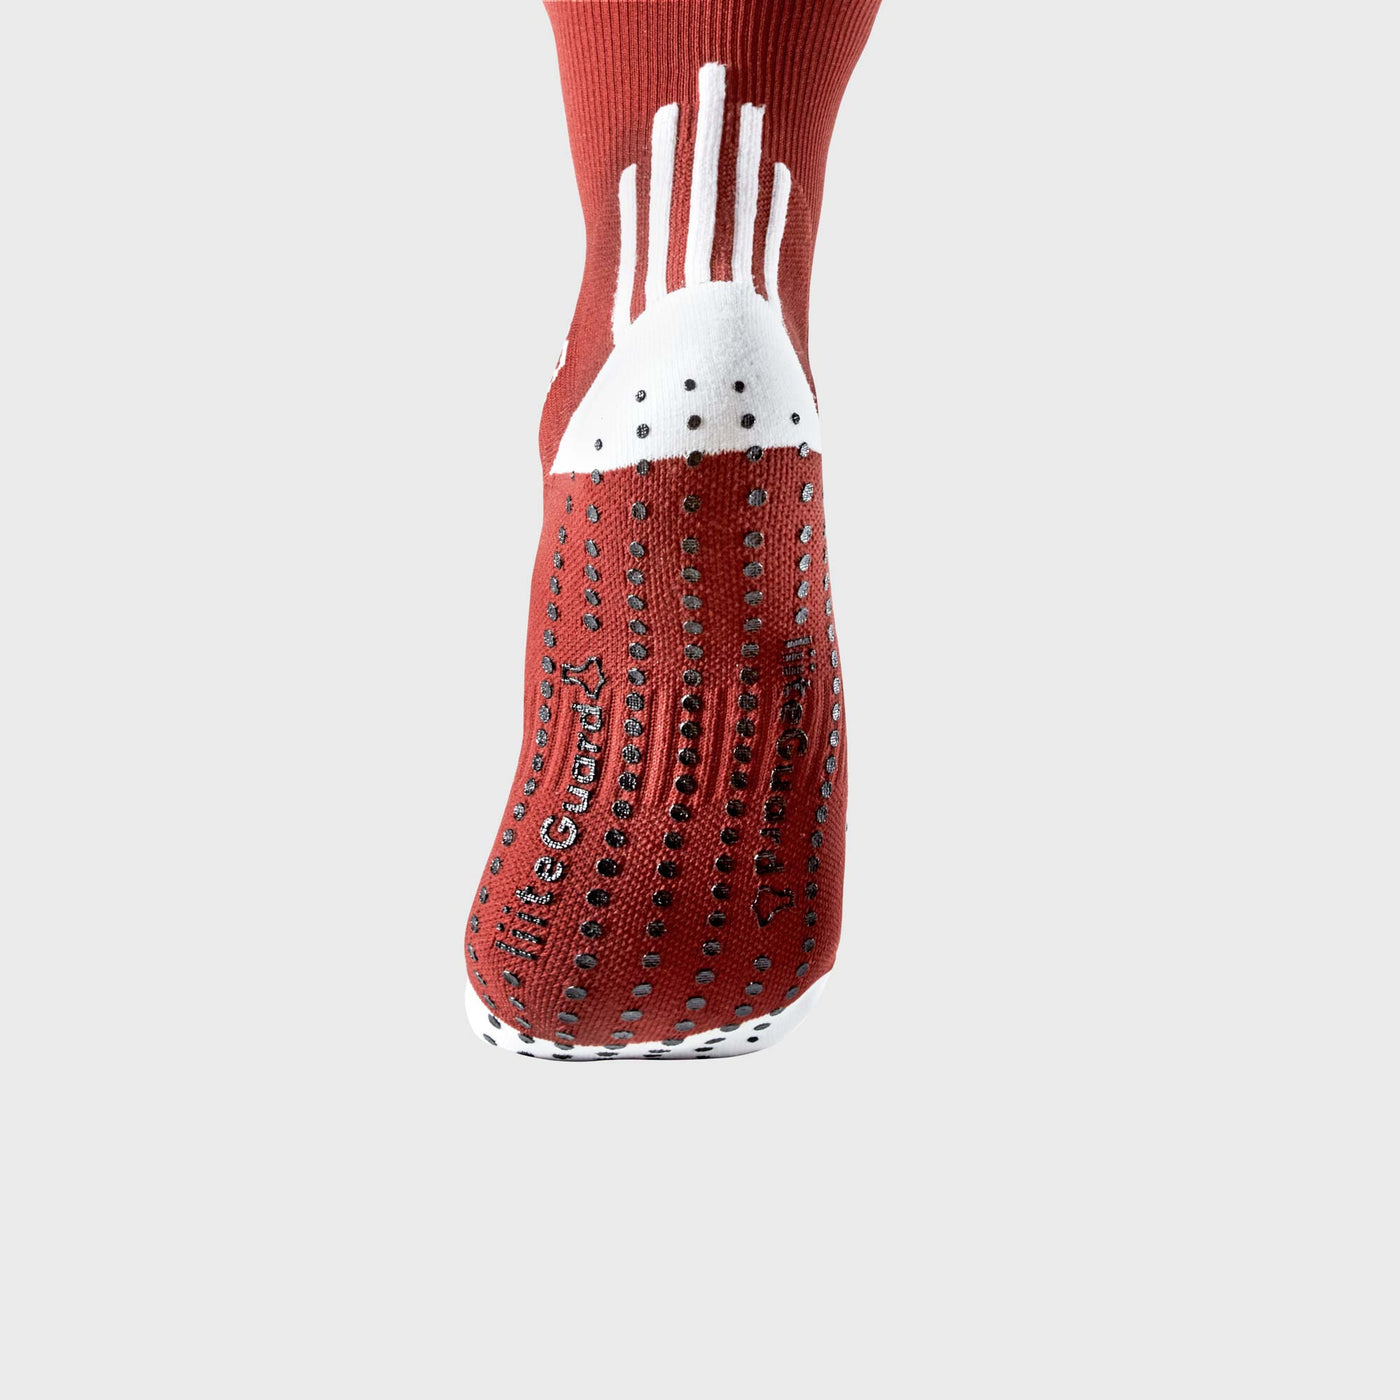 Liiteguard PRO-TECH Medium socks DARK RED